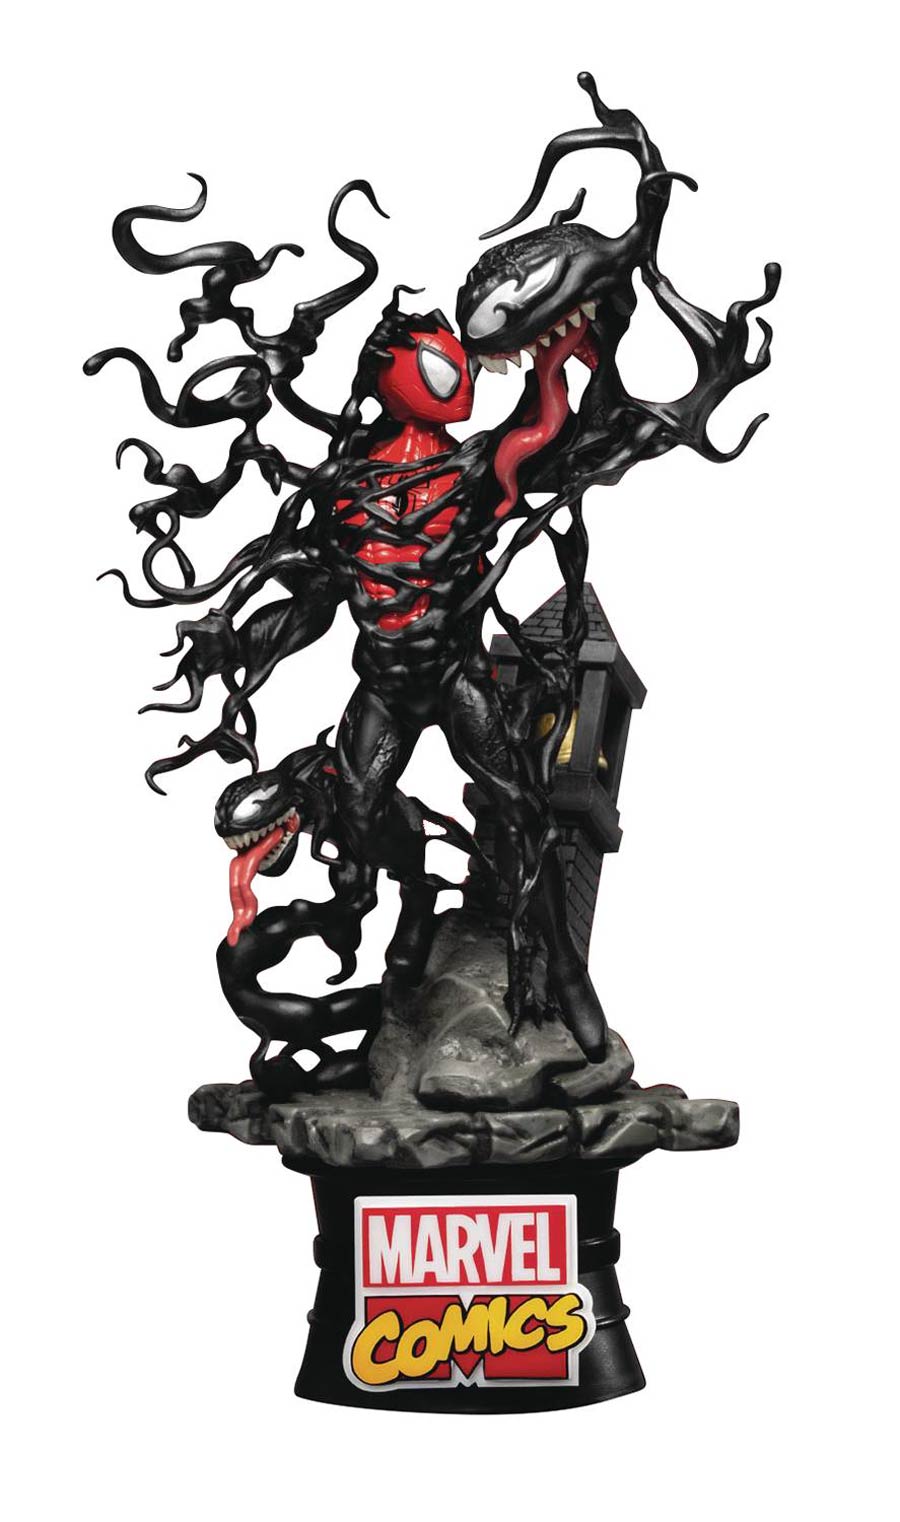 Marvel Comics DS-040 Spider-Man vs Venom D-Stage Previews Exclusive 6-Inch Statue